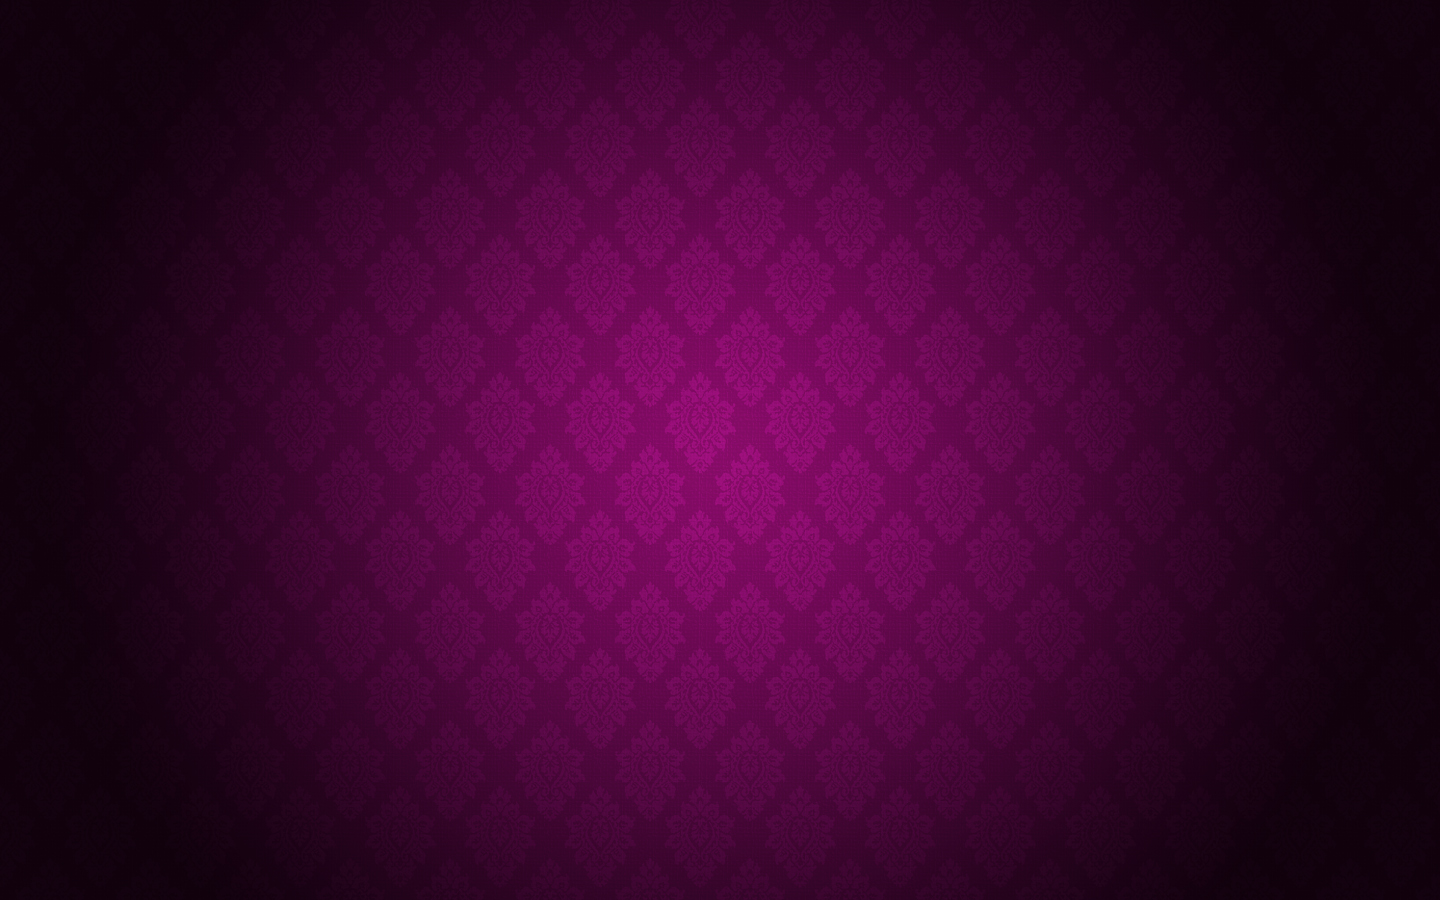 Pink Purple Full Hd Backgrounds Vintage   1440x900 iWallHD   Wallpaper